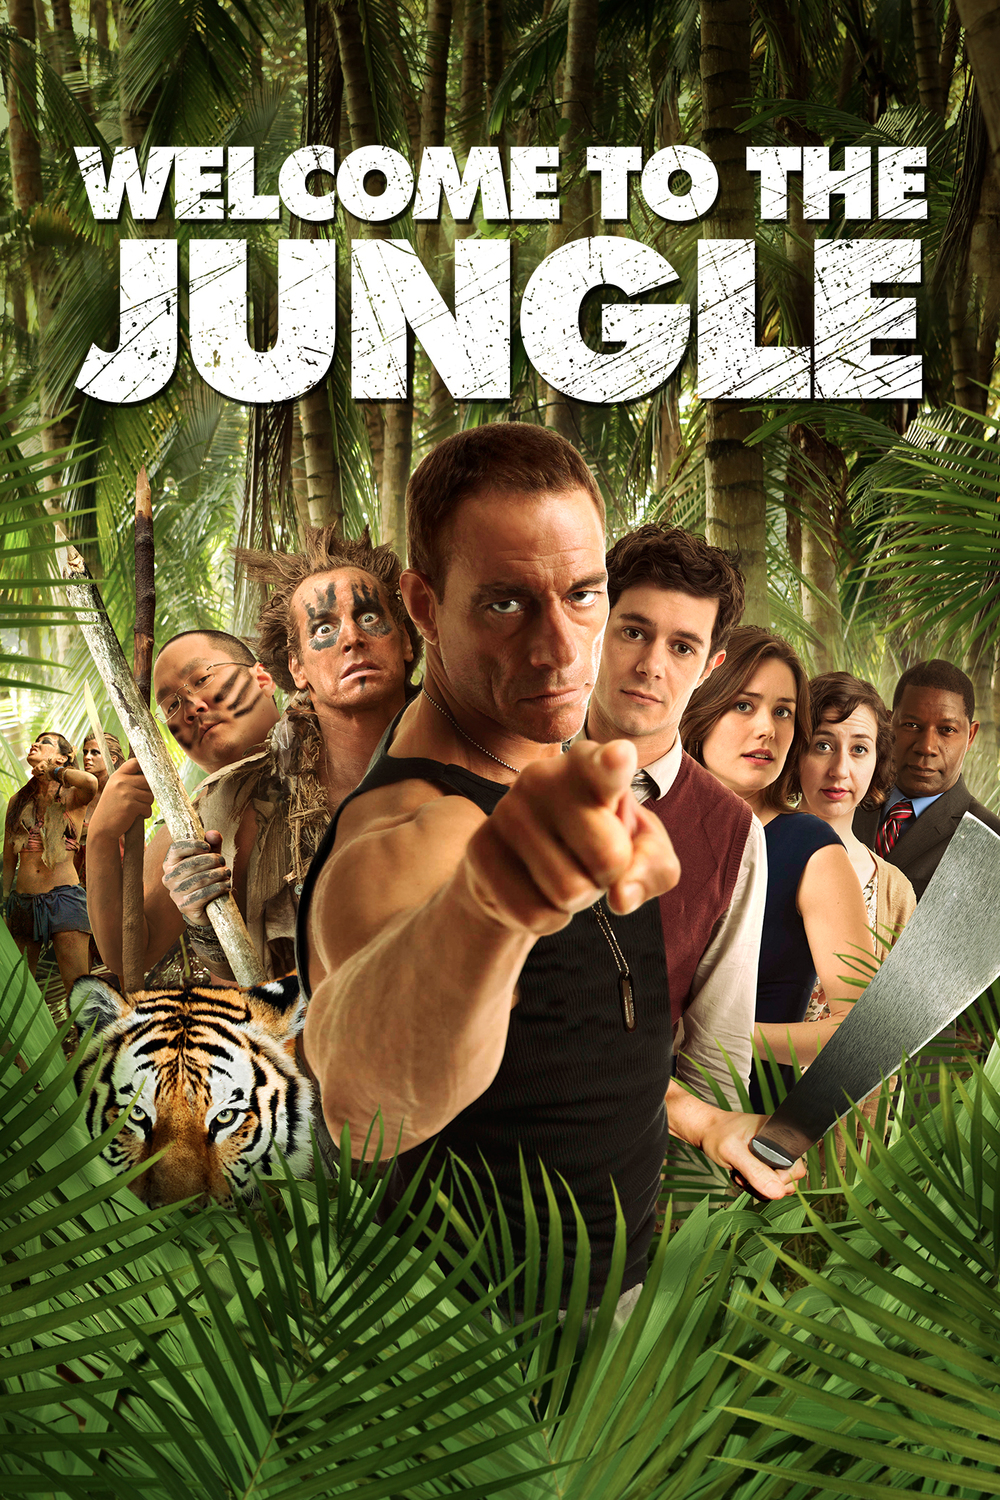 Xem Phim Thử Thách Sống Còn - Welcome To The Jungle (2013) HD Vietsub mien phi - Poster Full HD